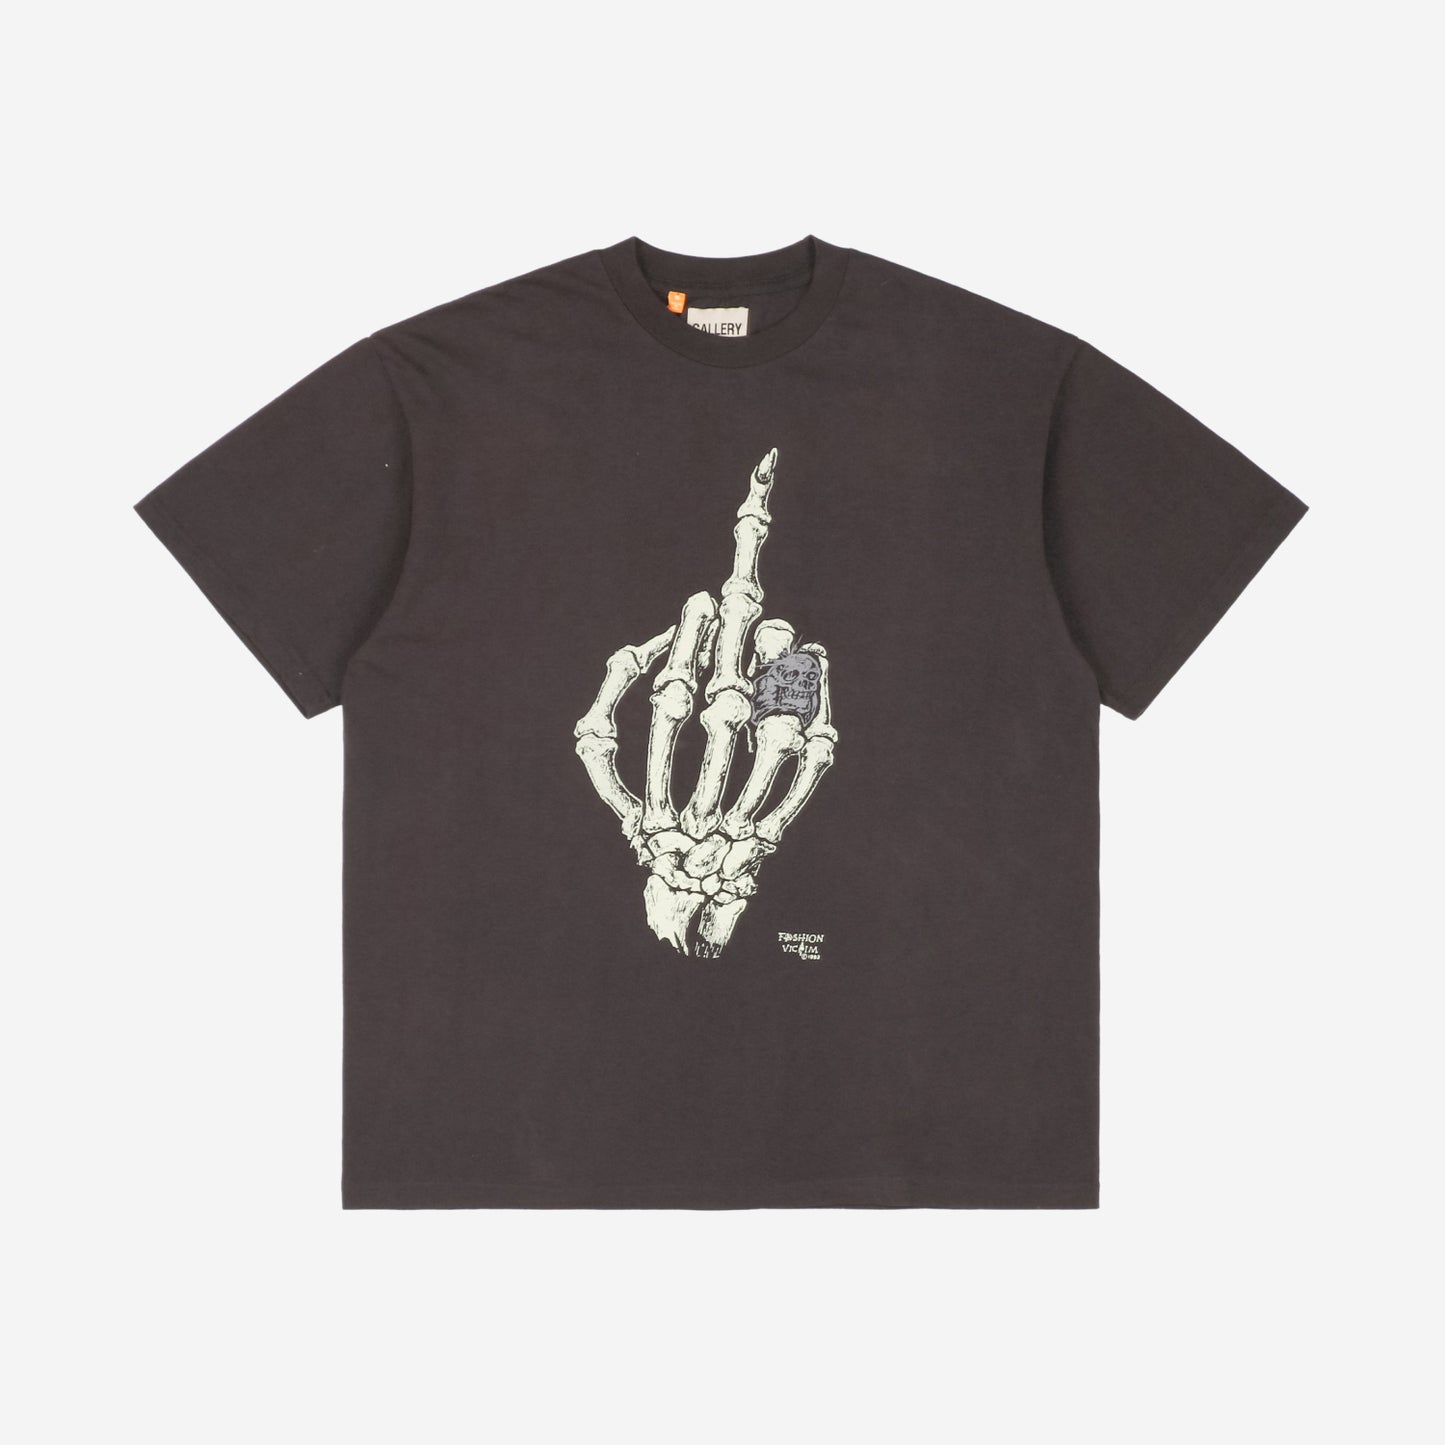 Camiseta Gallery Dept. Skull Hand - Urbanize Streetwear